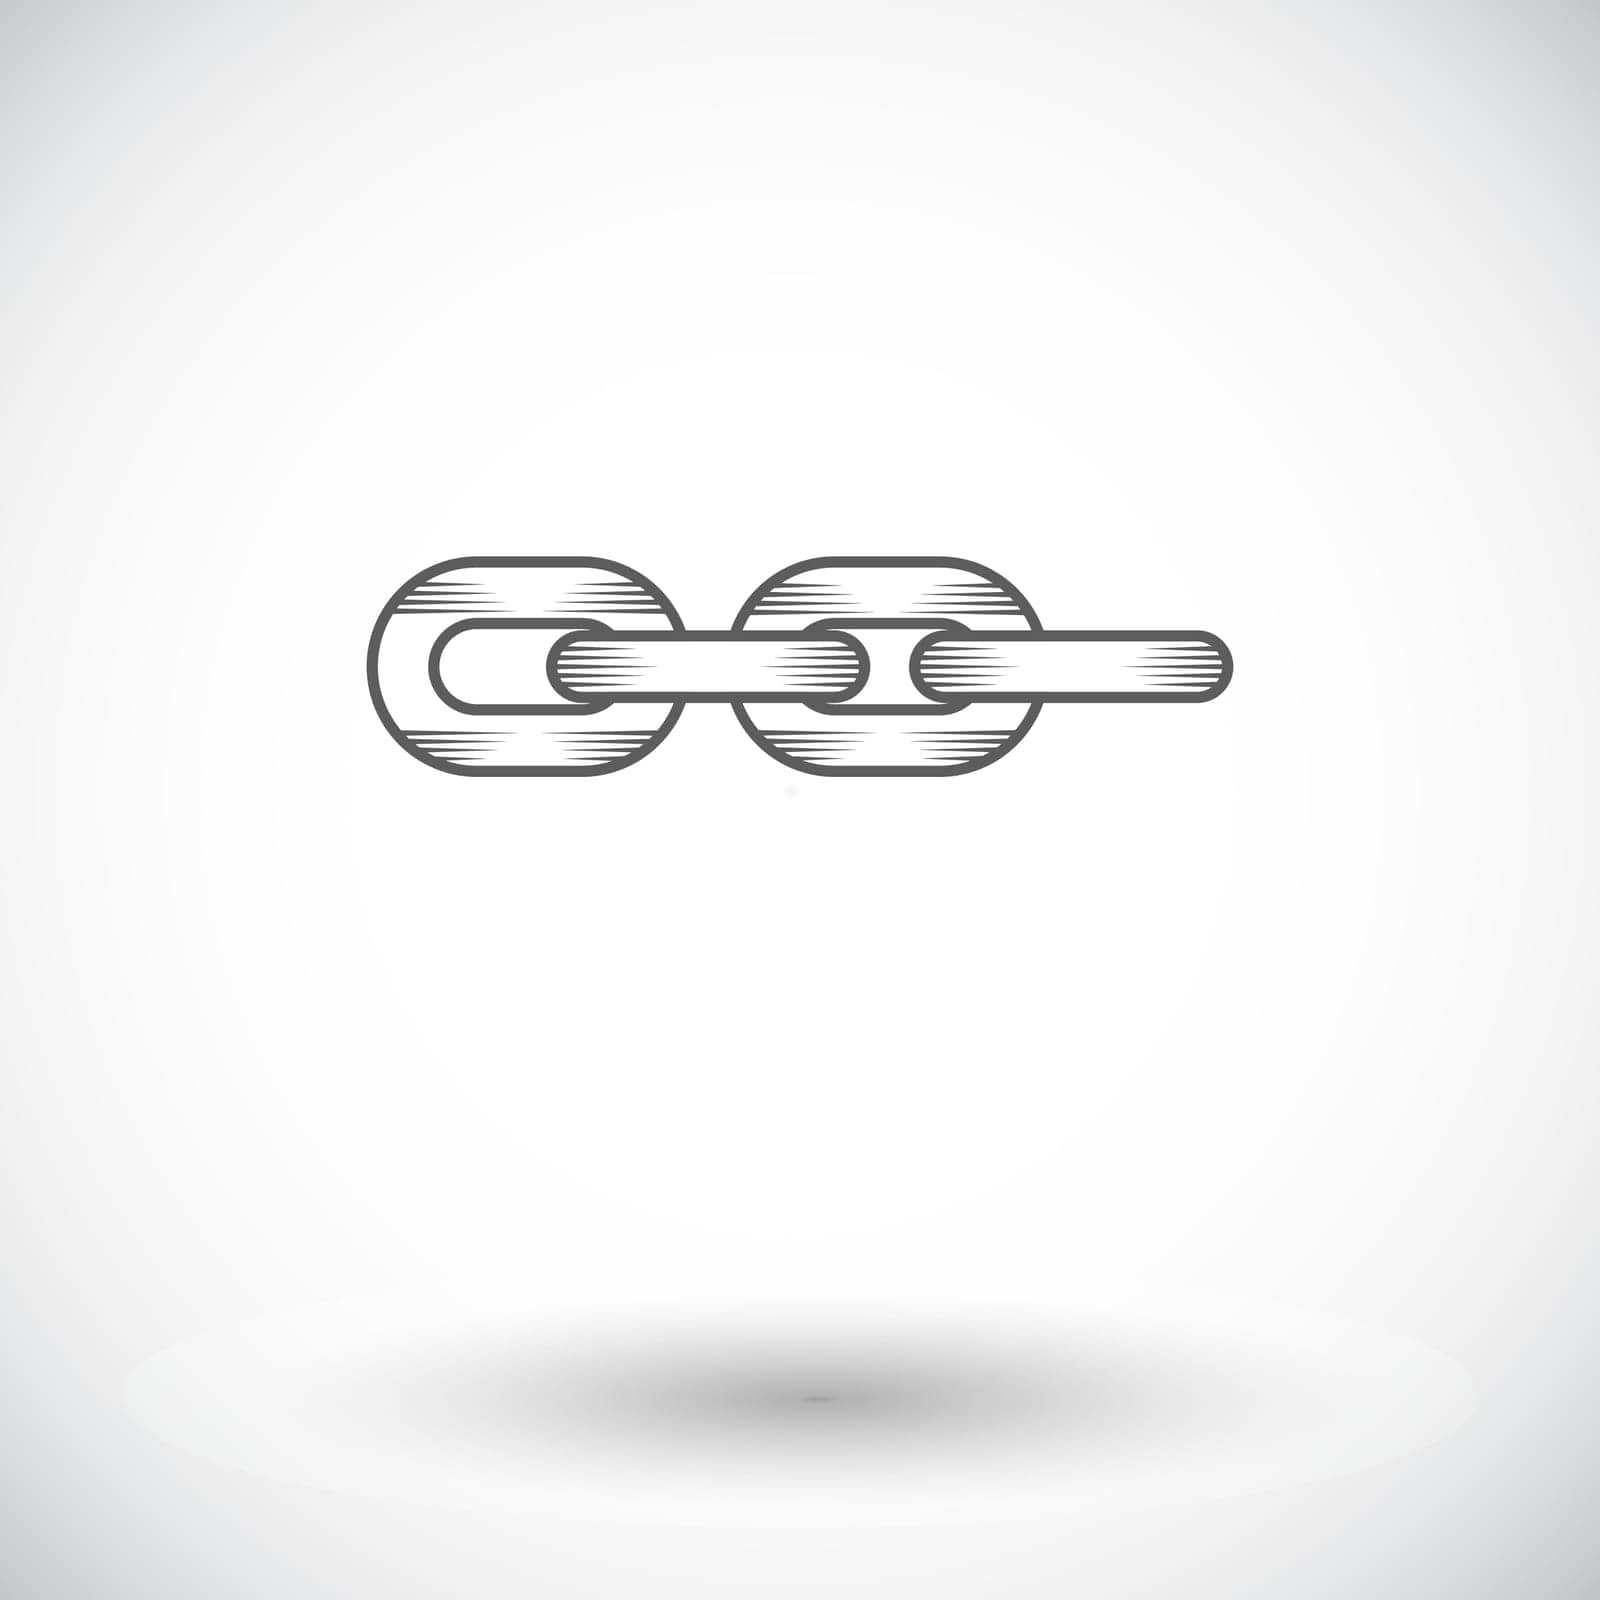 Link. Single flat icon on white background. Vector illustration.